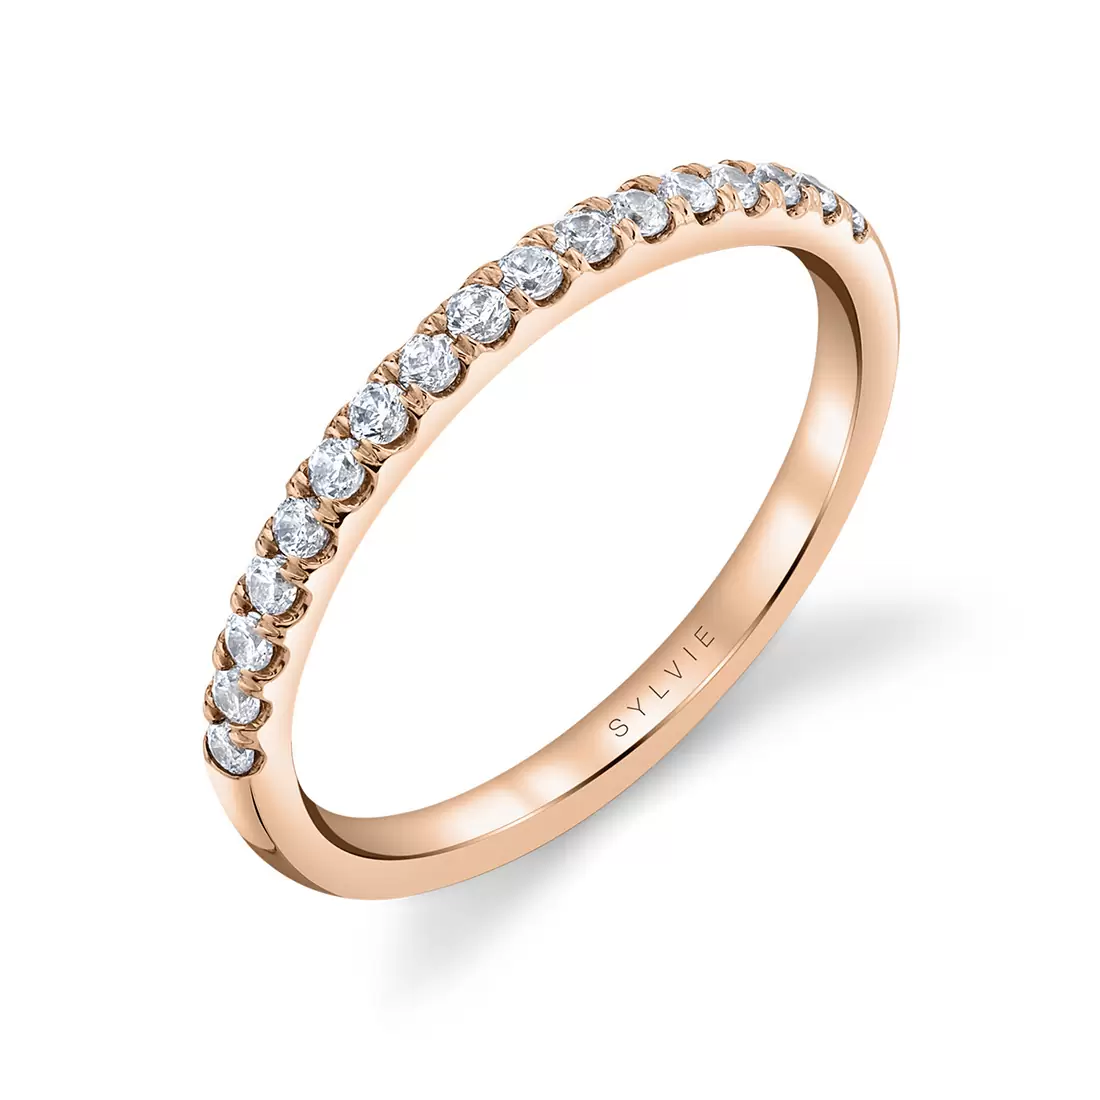 Rose gold diamond classic wedding ring.